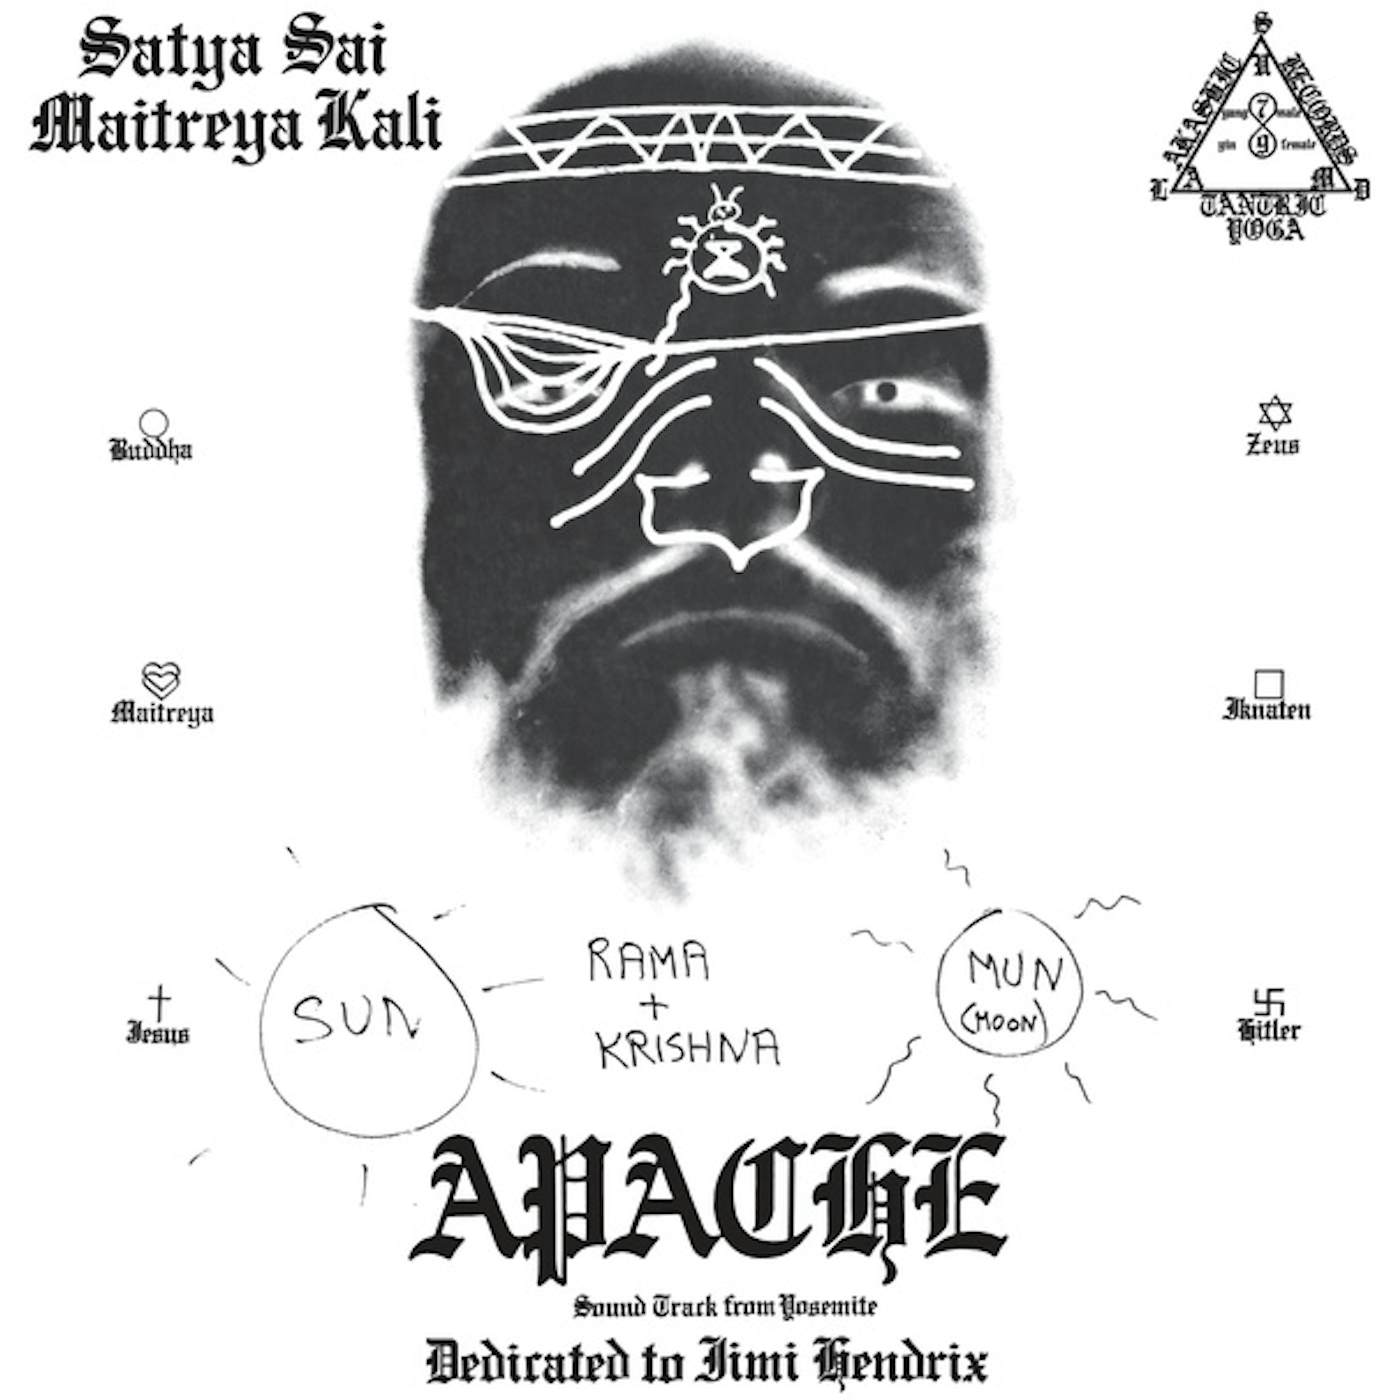 Craig Smith / Maitreya Kali Apache / Inca Vinyl Record